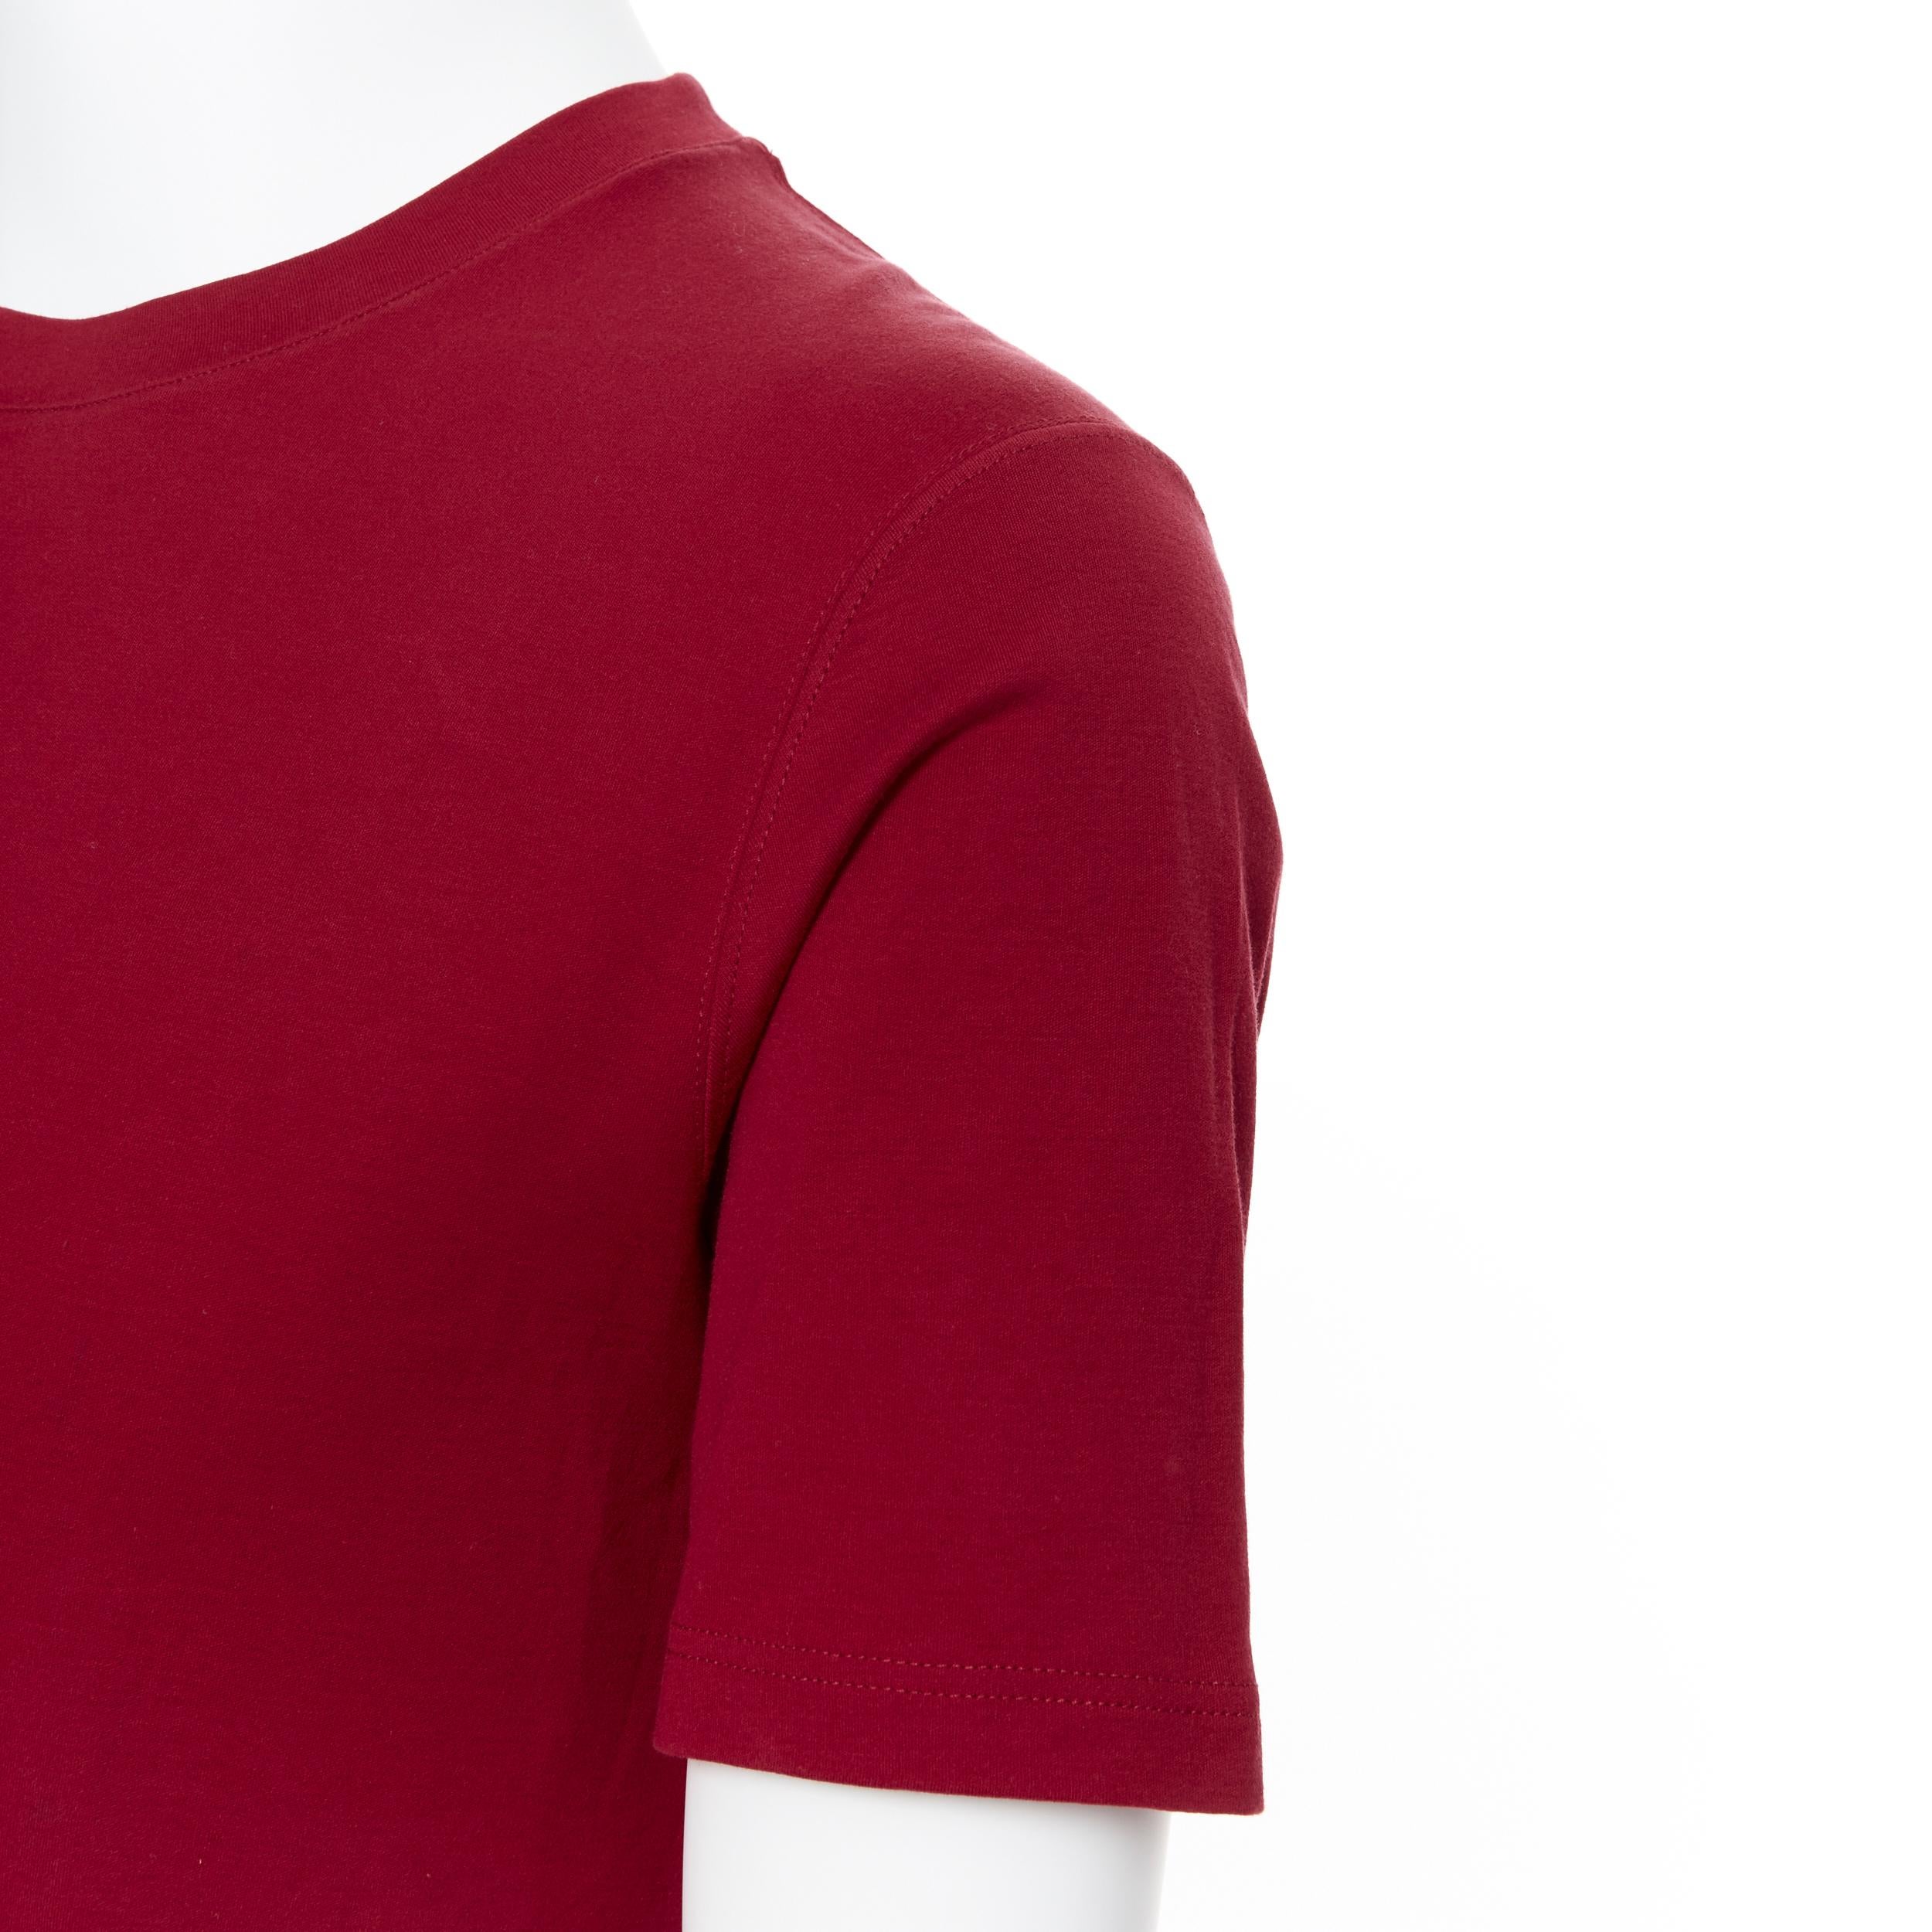 LOUIS VUITTON 100% cotton red crew neck short sleeve LV logo tab t-shirt S 2